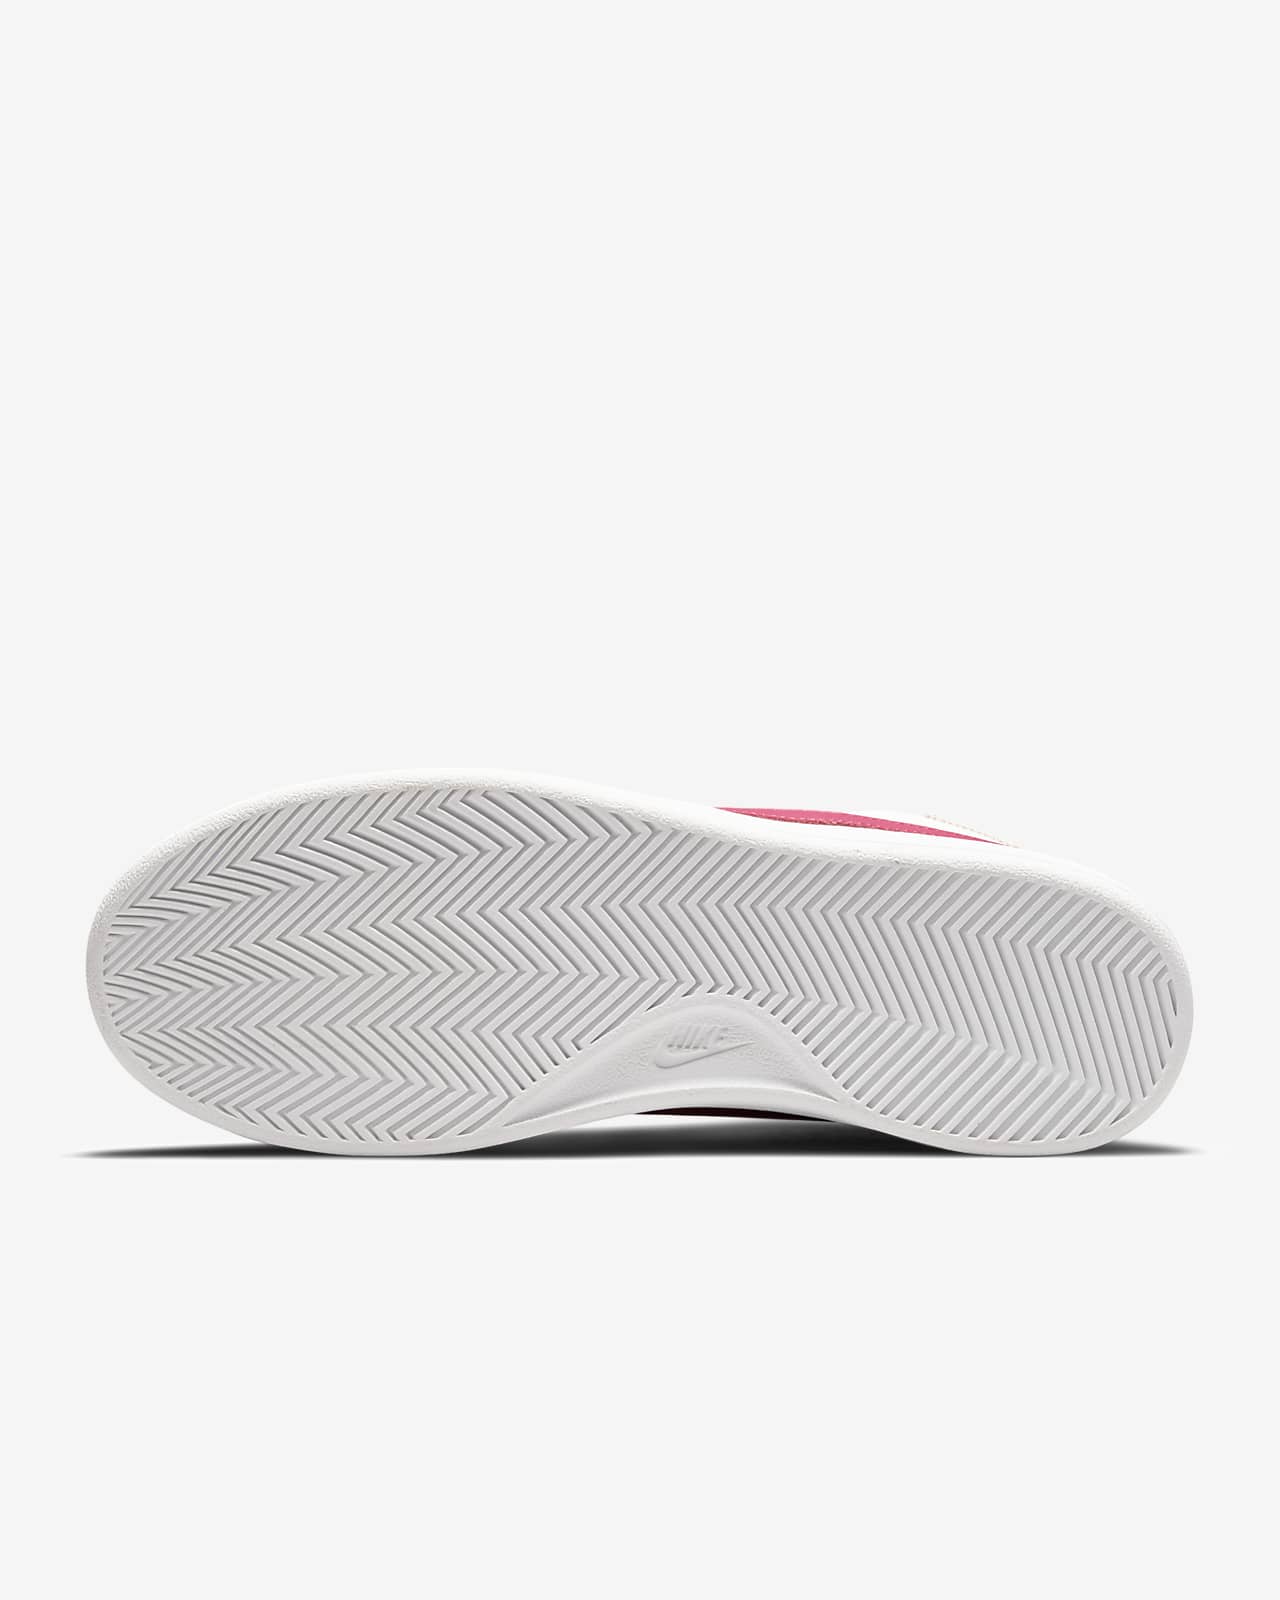 Court Royale 2 Shoes. Nike.com